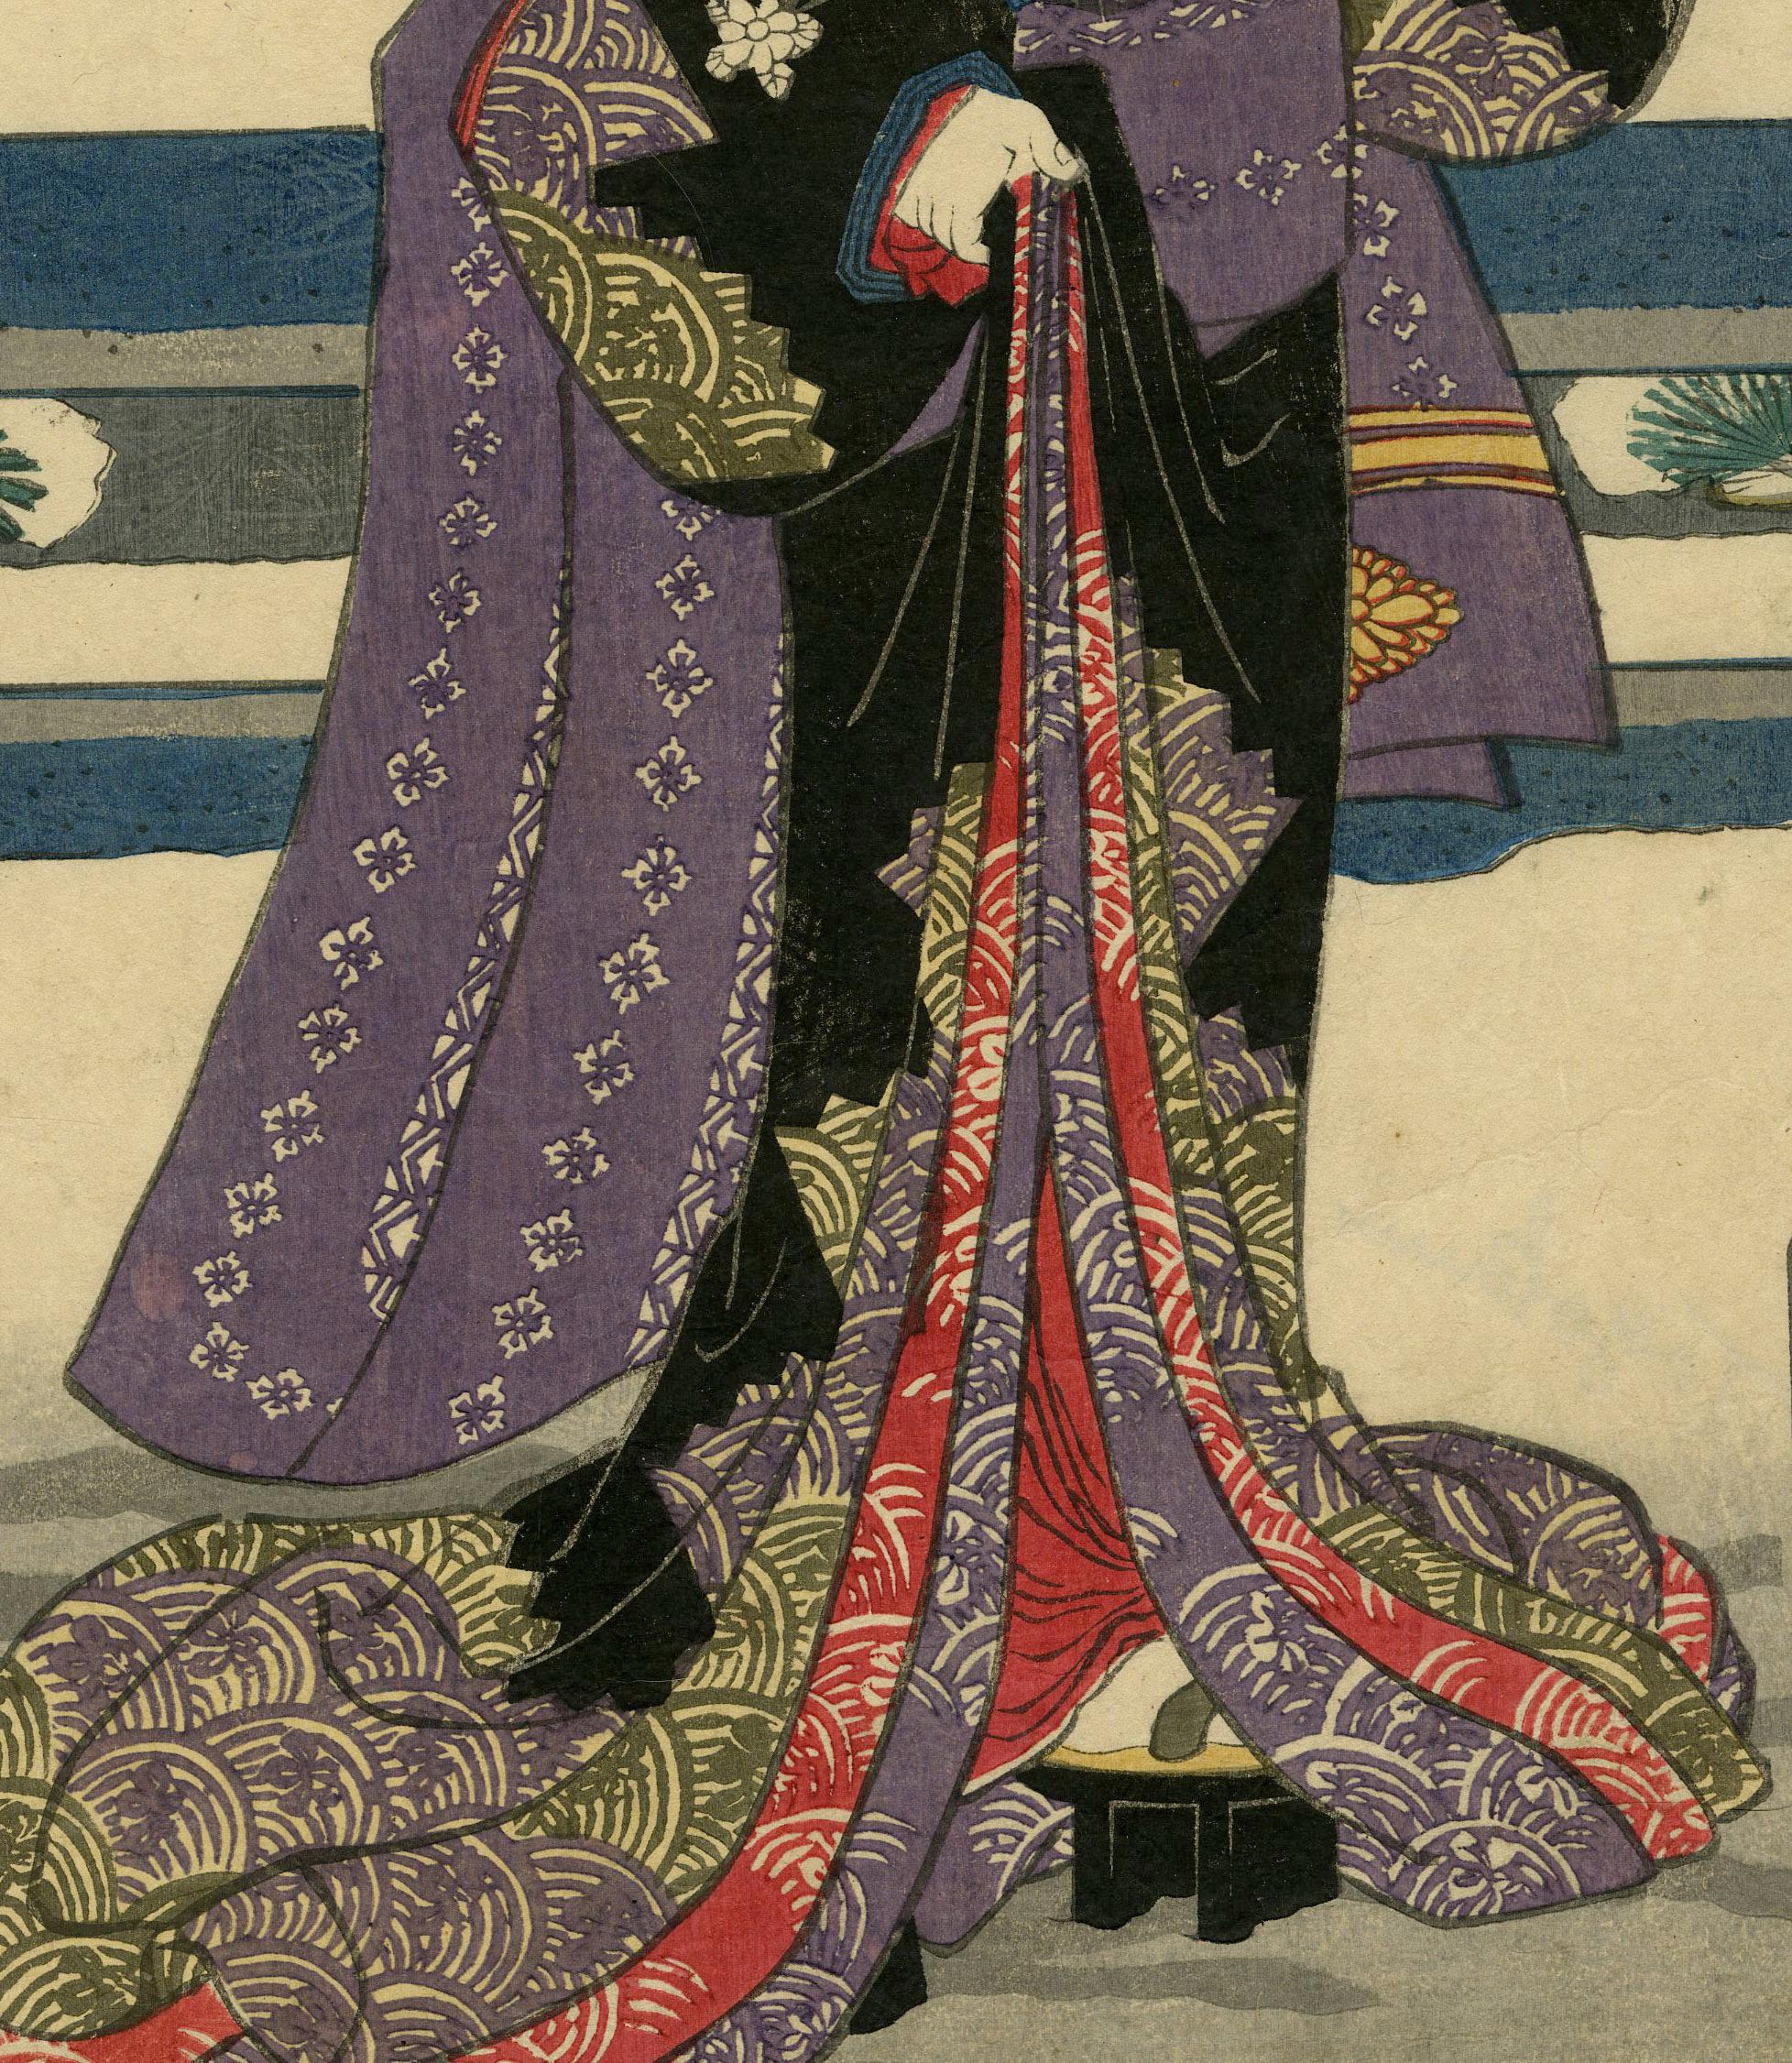 Courtesan Kumekichi
Color woodblock, 1858
Kabuki Actor Iwai Kumesaburo III in the role of courtesan Kumekichi, who is standing in snow hold a red sake cup
Publisher: Ohkuniya Kinjiro
Signed: Toyokuni ga in the Toshidama cartouche
Condition: Slightly